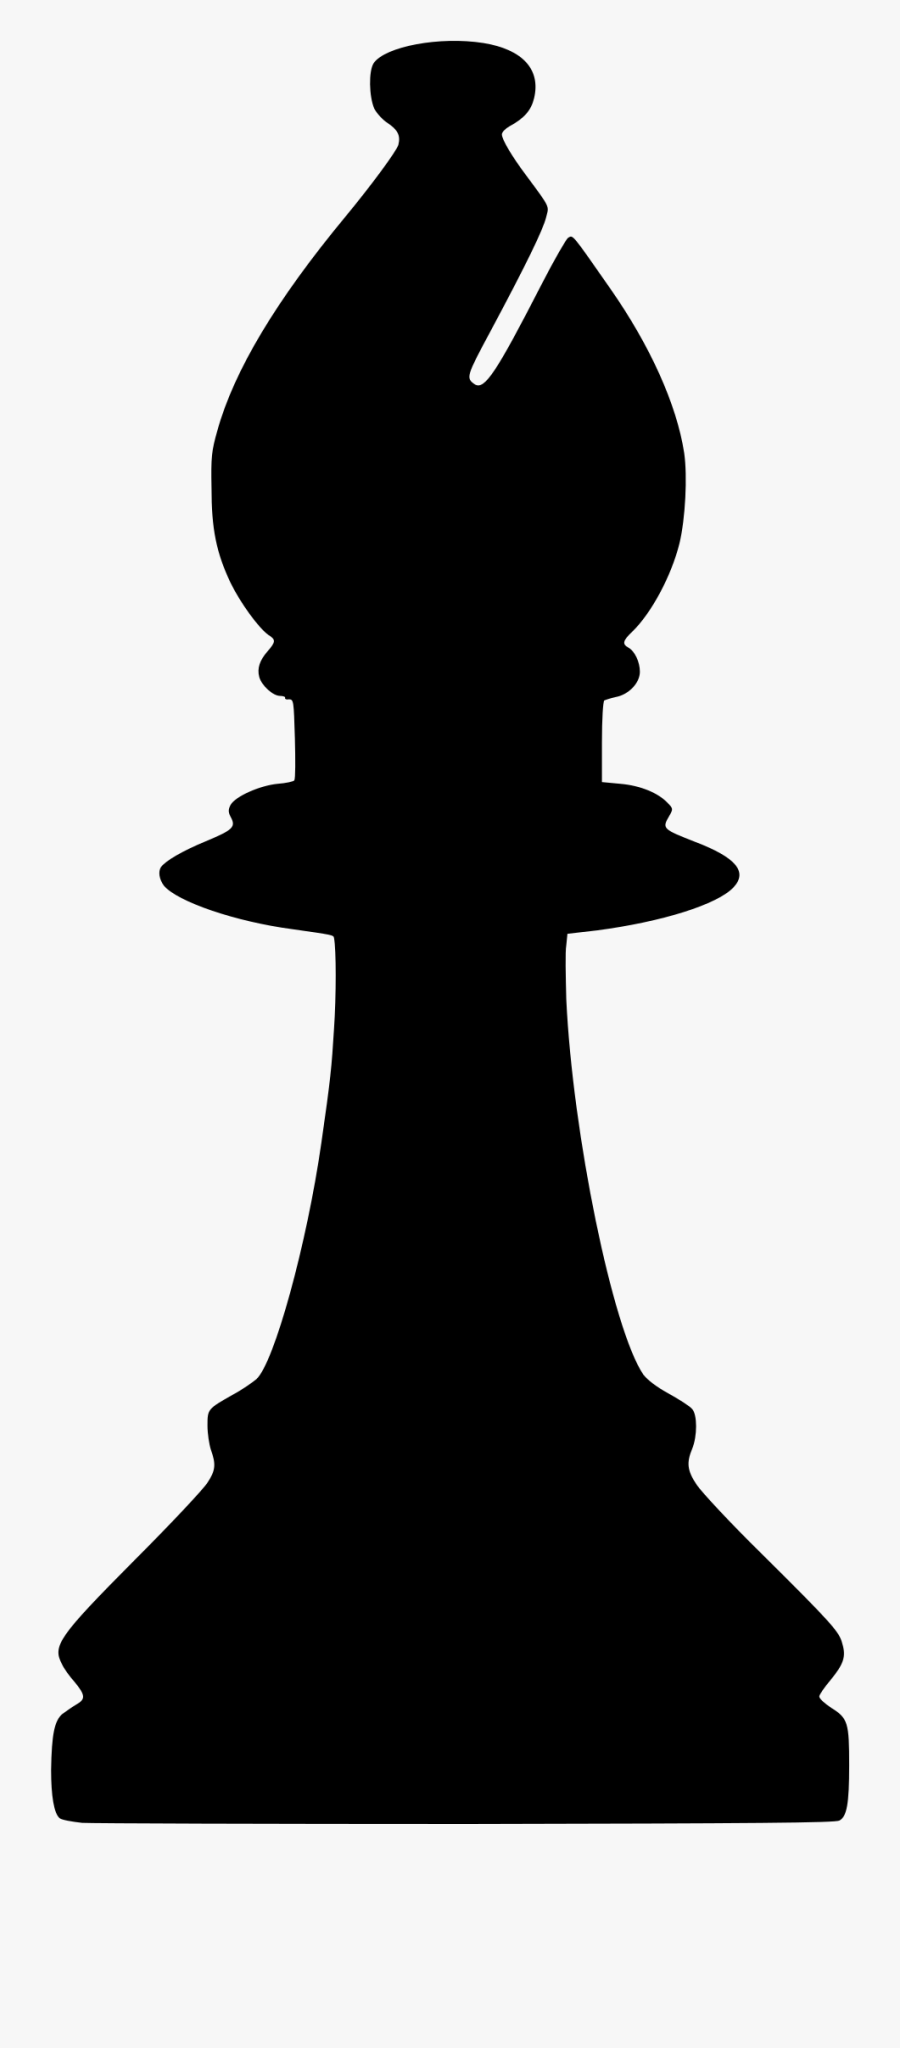 Clipart Silhouette Chess Piece Remix Bishop Alfil Chess - Bishop Chess Piece Clipart, Transparent Clipart